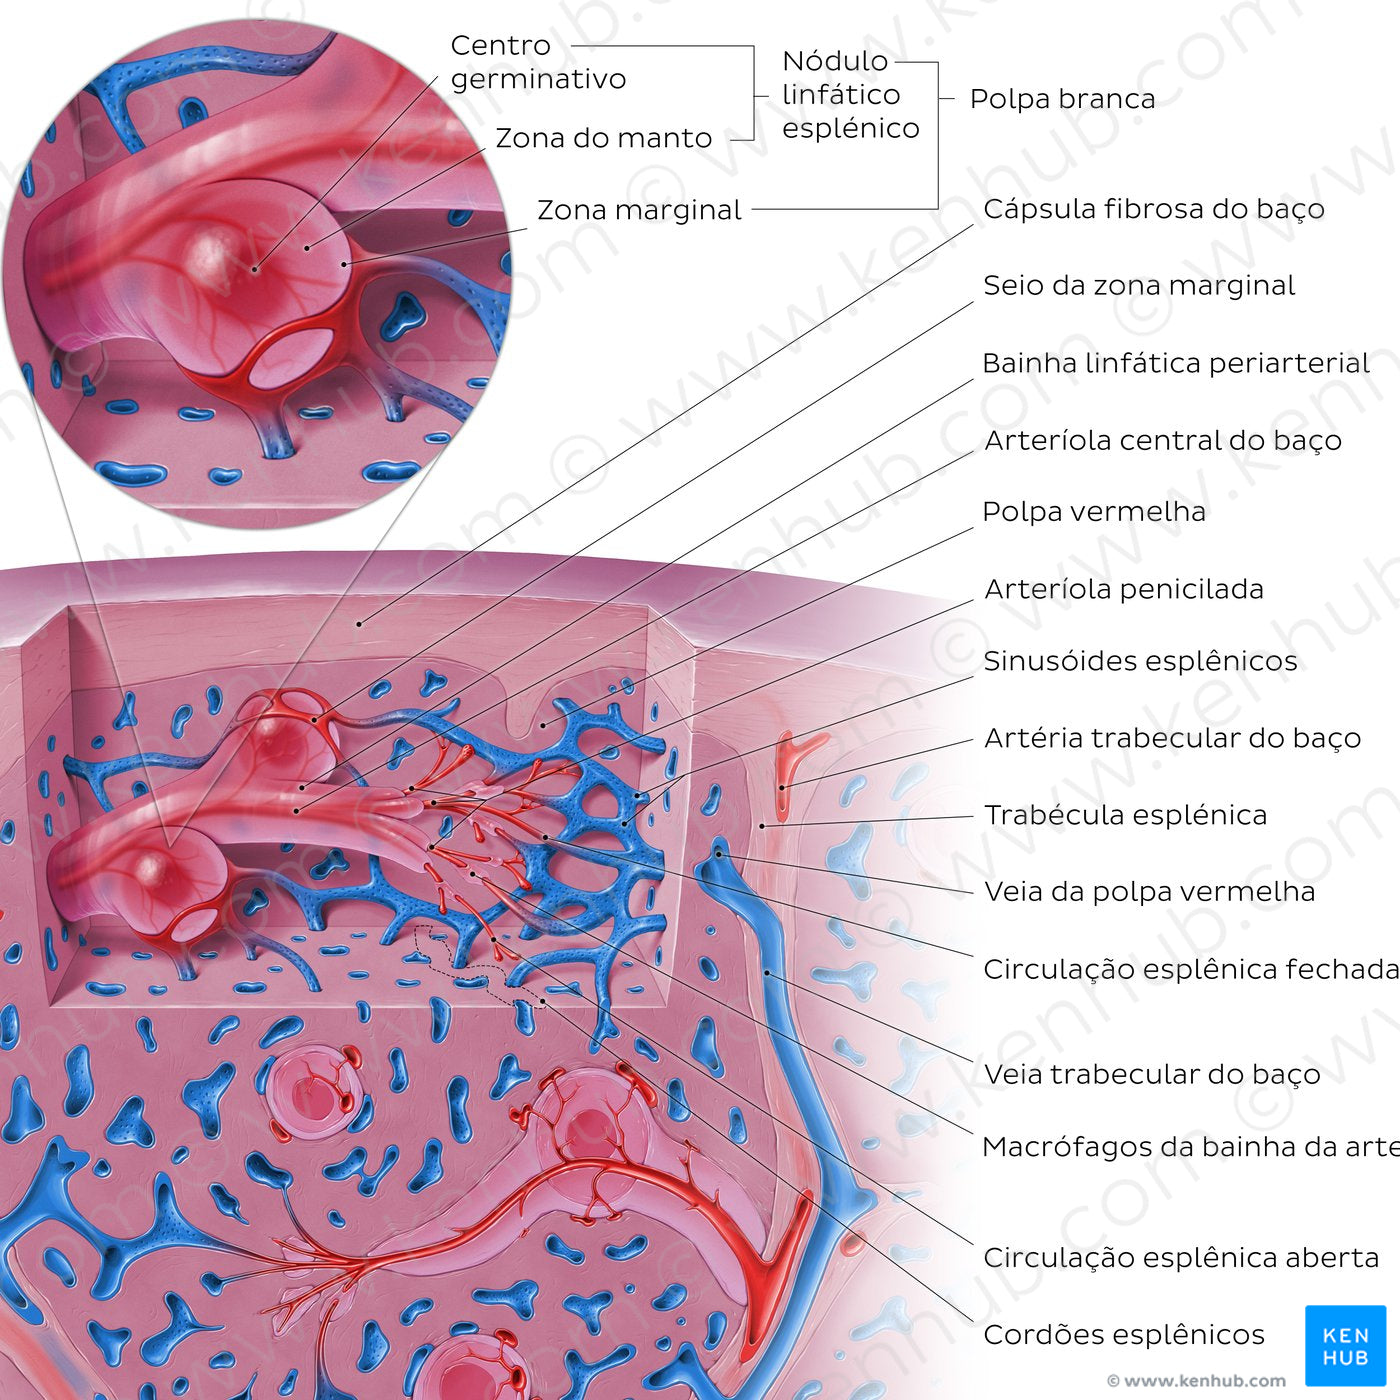 Spleen microcirculation (Portuguese)